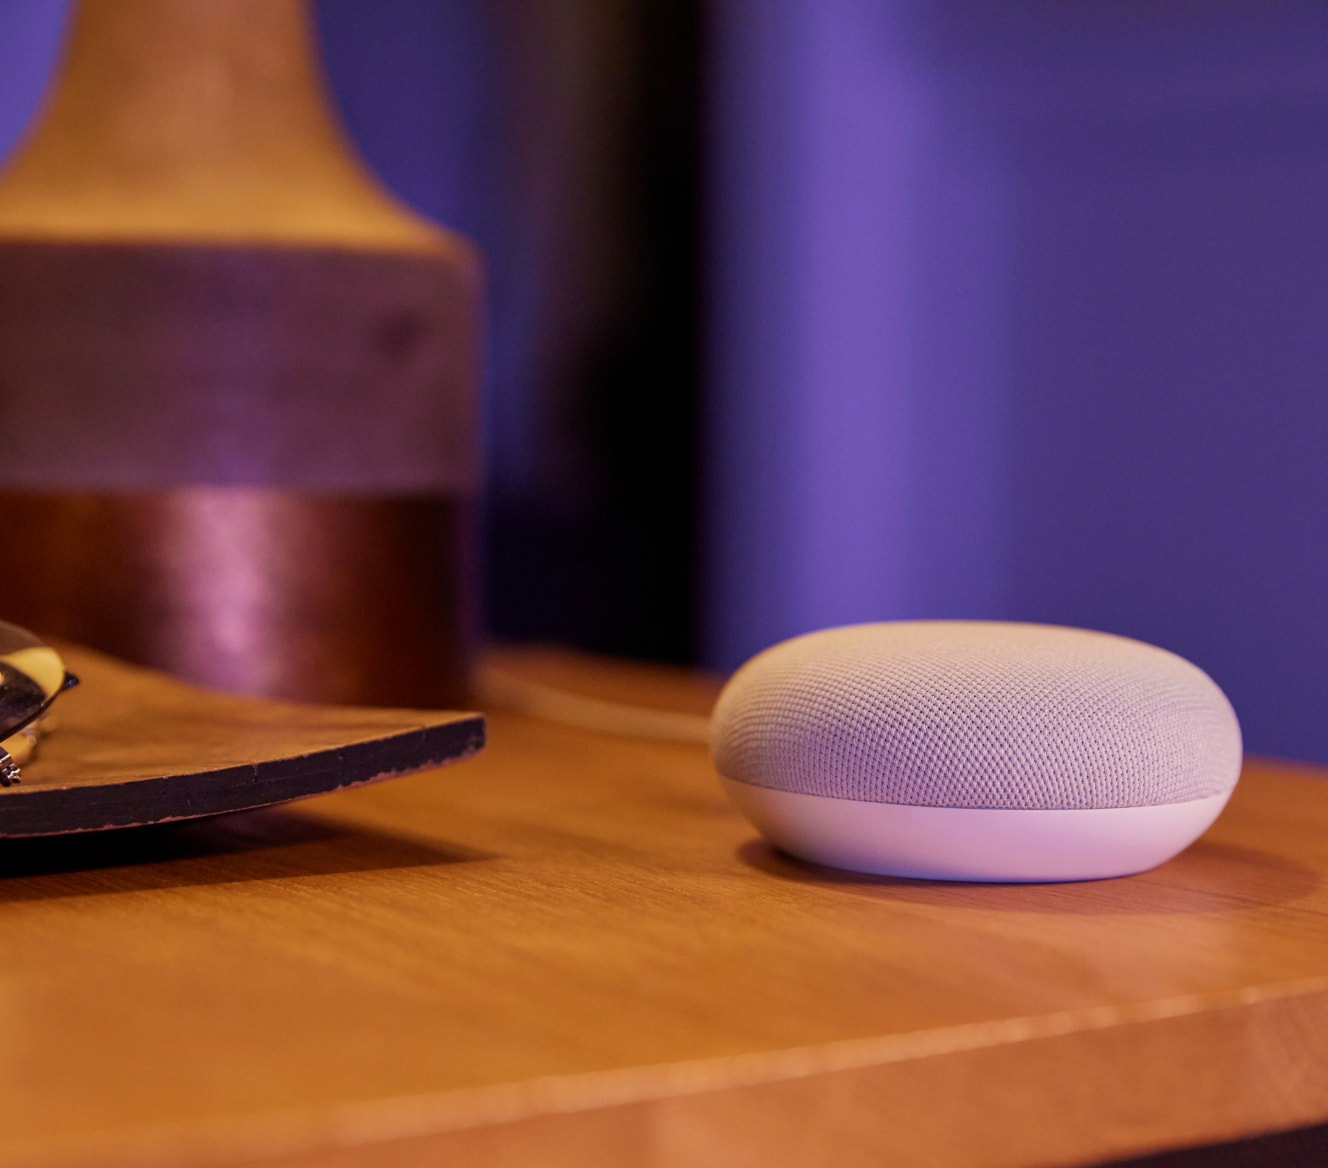 Google voice device on a dresser